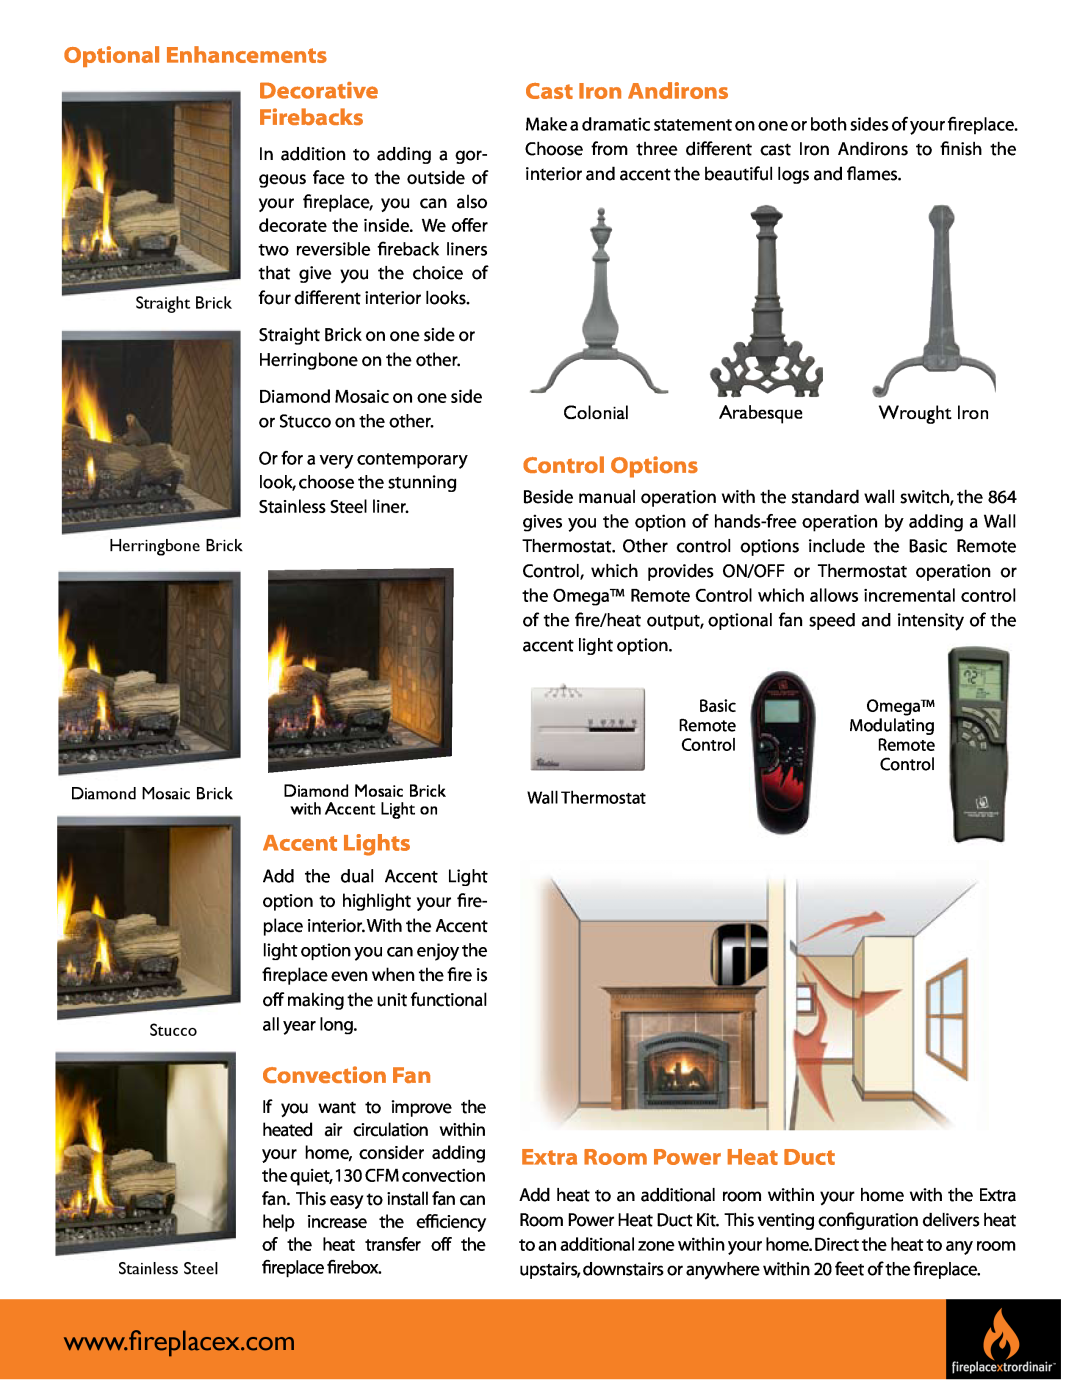 FireplaceXtrordinair 864 See-Thru manual Optional Enhancements, Decorative Firebacks, Cast Iron Andirons, Control Options 